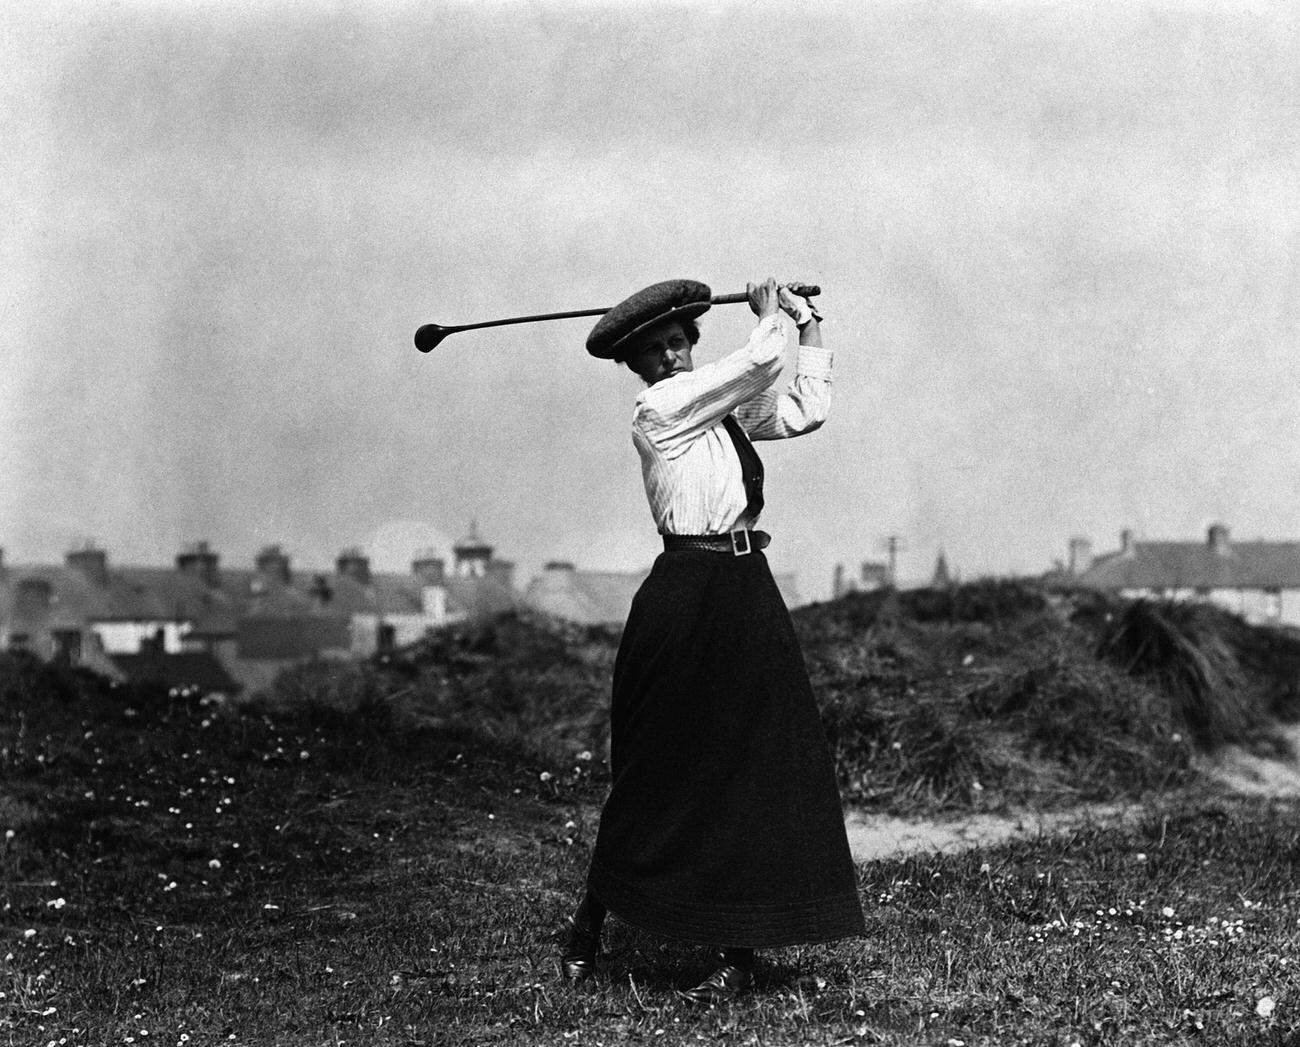 Miss B. Thomson swinging golf club.